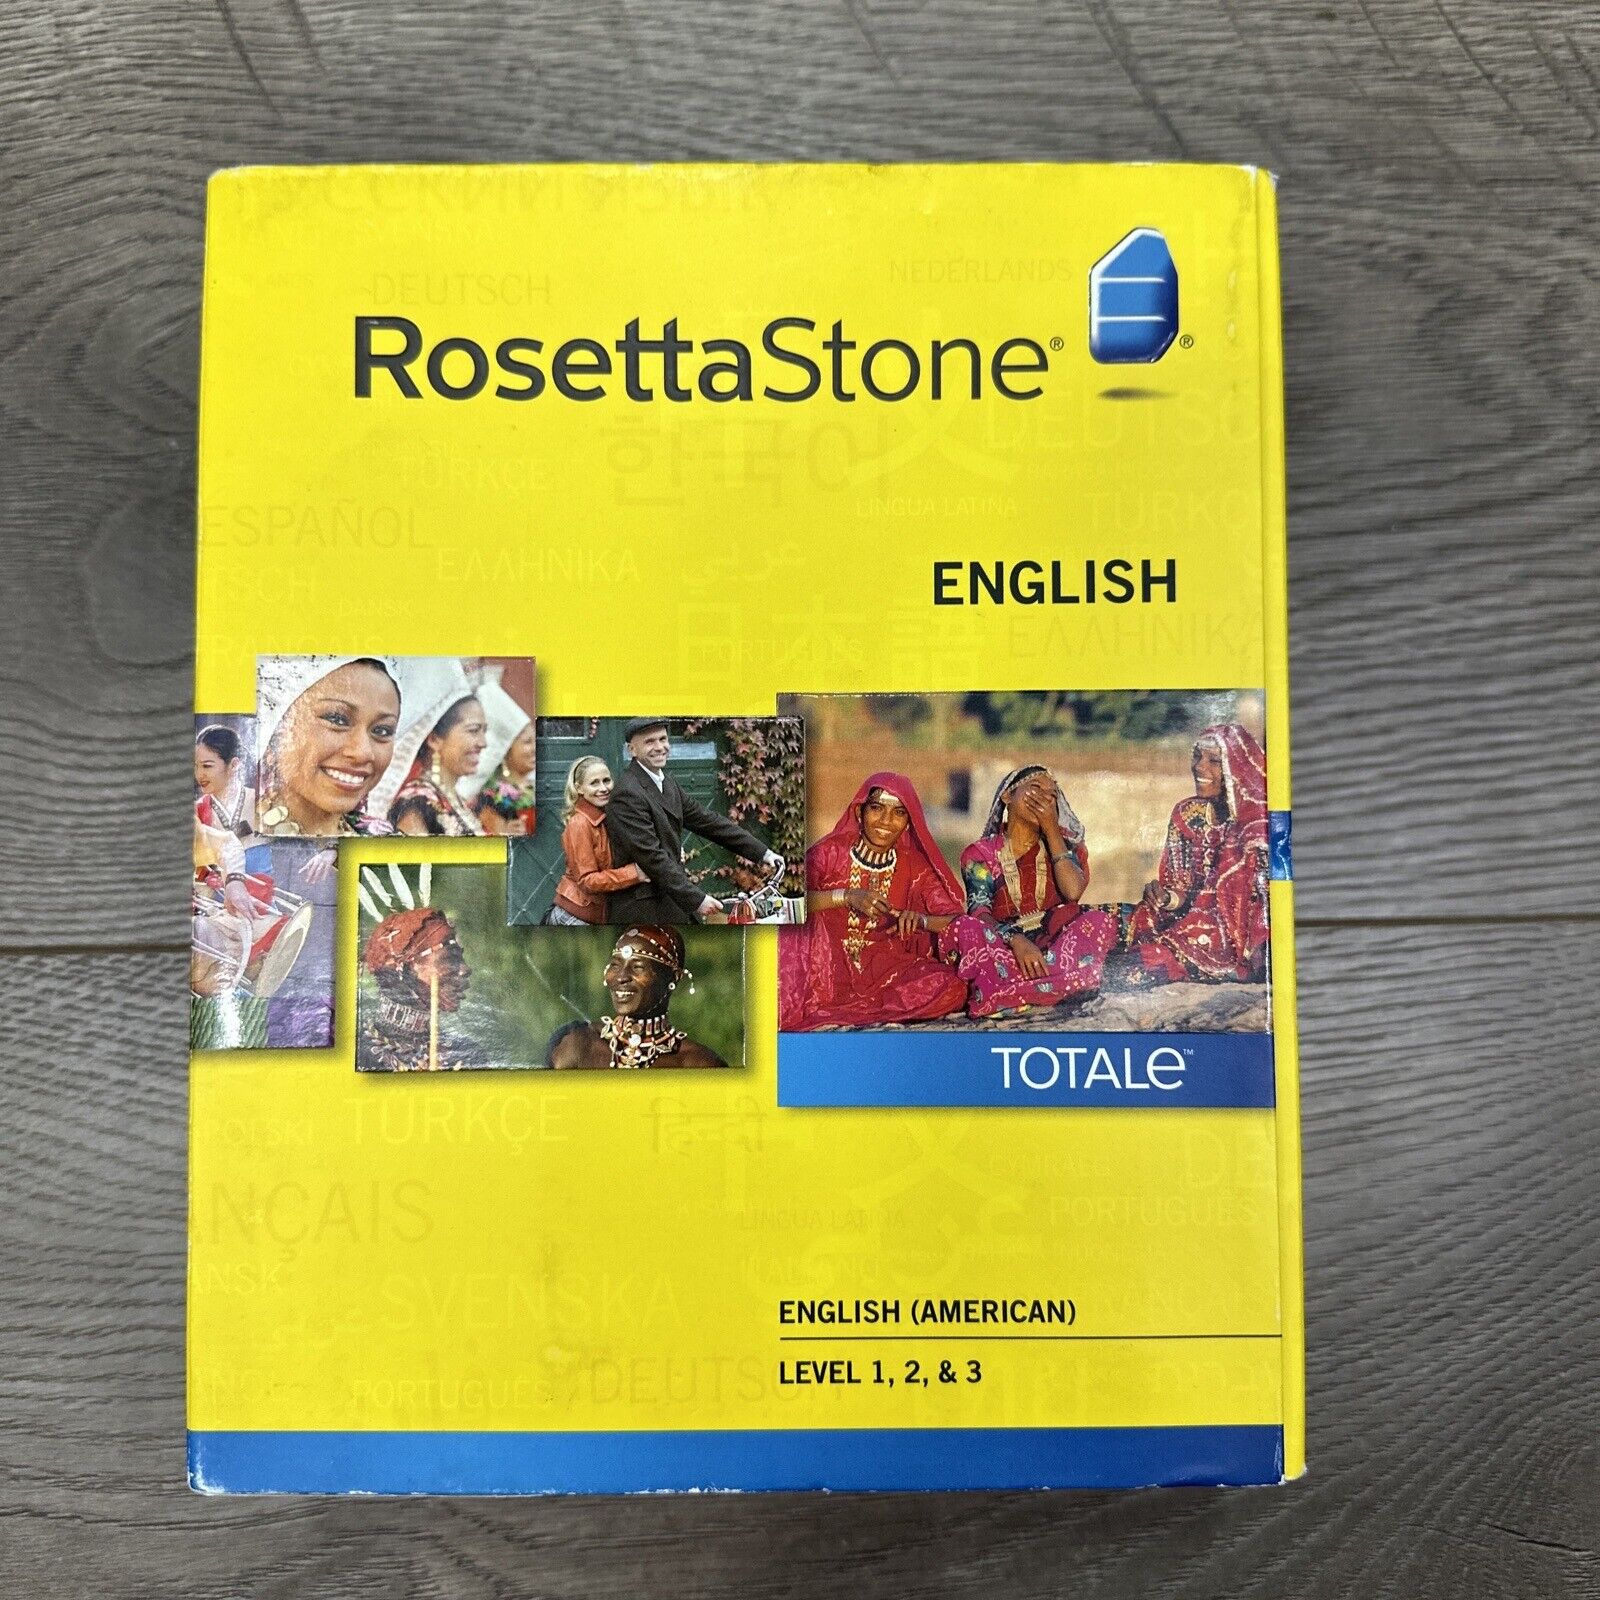 Rosetta Stone Version 4 English American Levels 1-3 1, 2, 3 - New Sealed